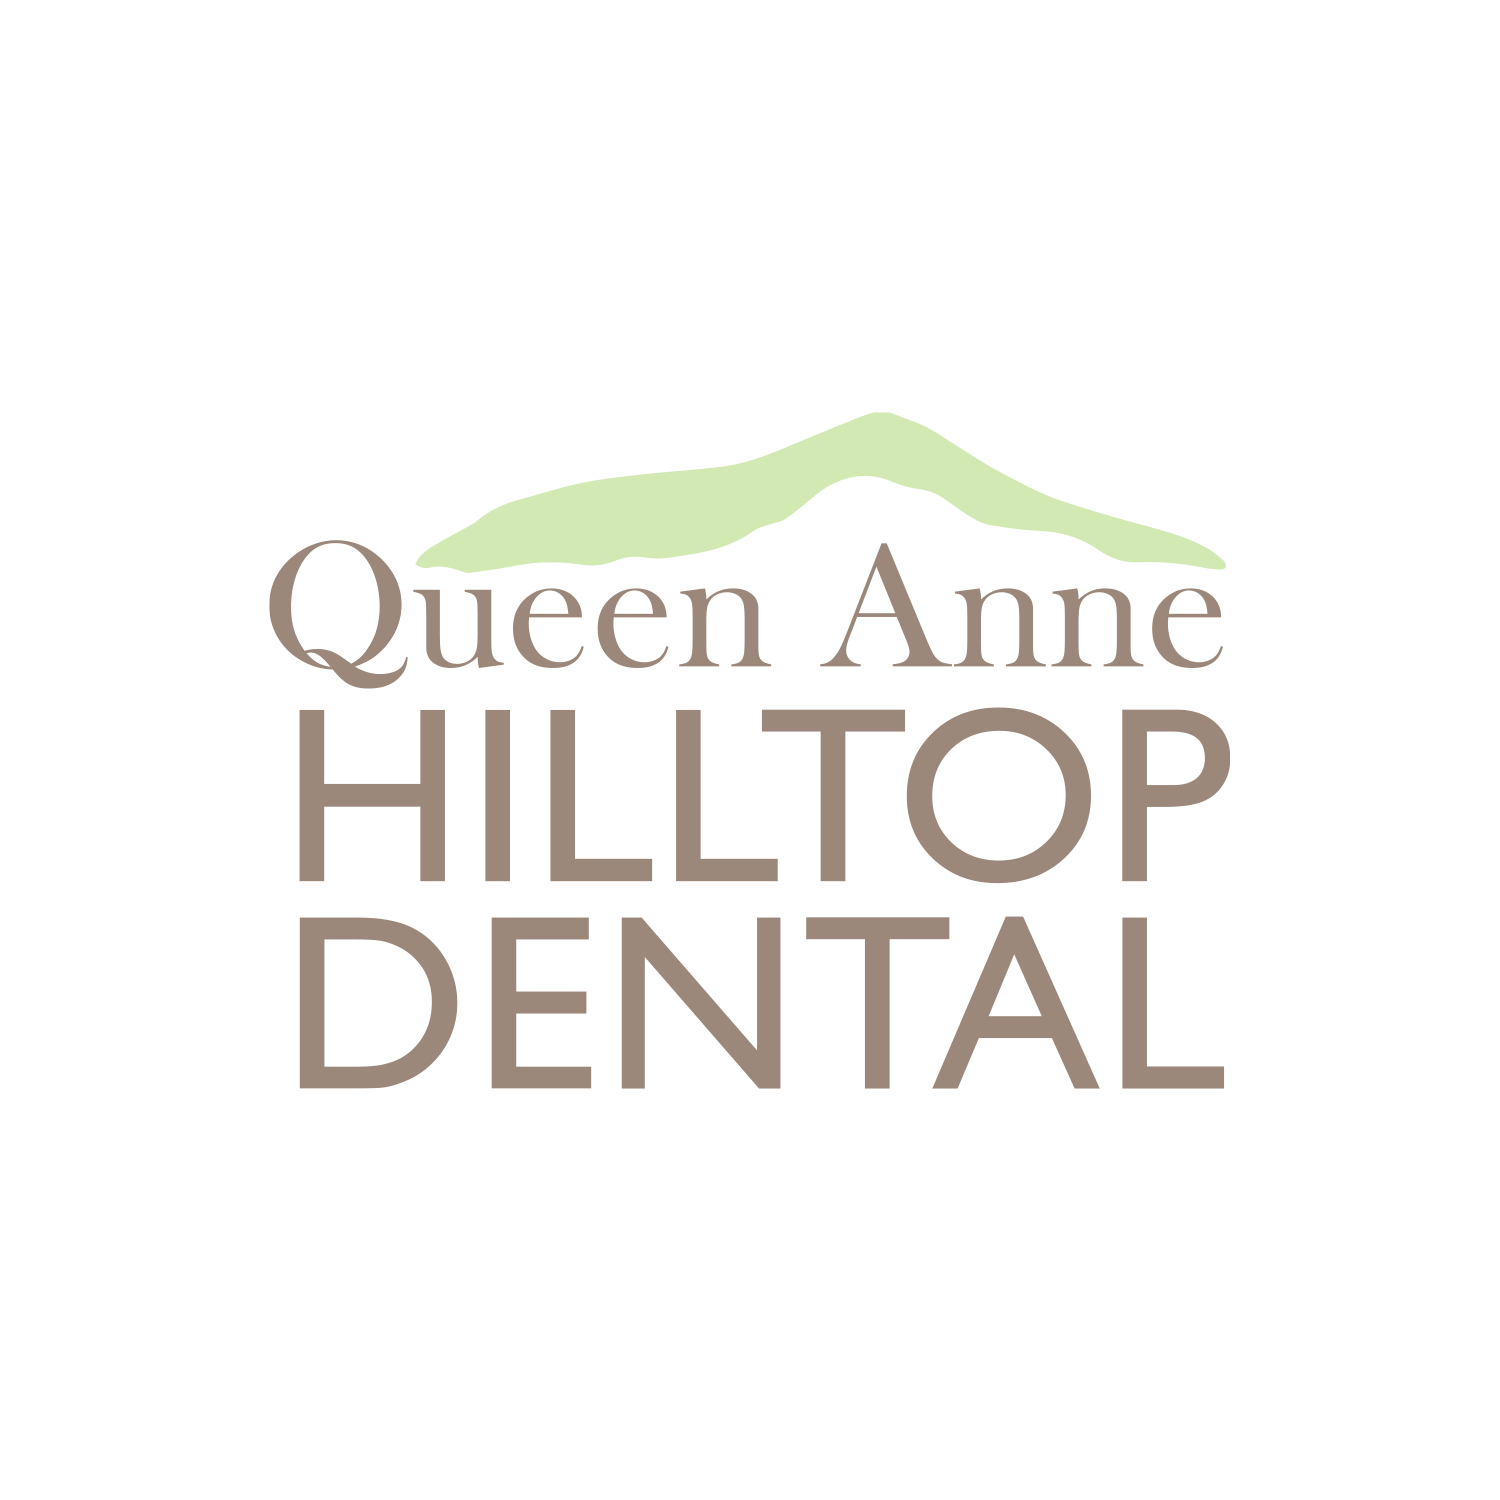 Queen Anne Hilltop Dental - Seattle, WA 98119 - (206)312-7466 | ShowMeLocal.com